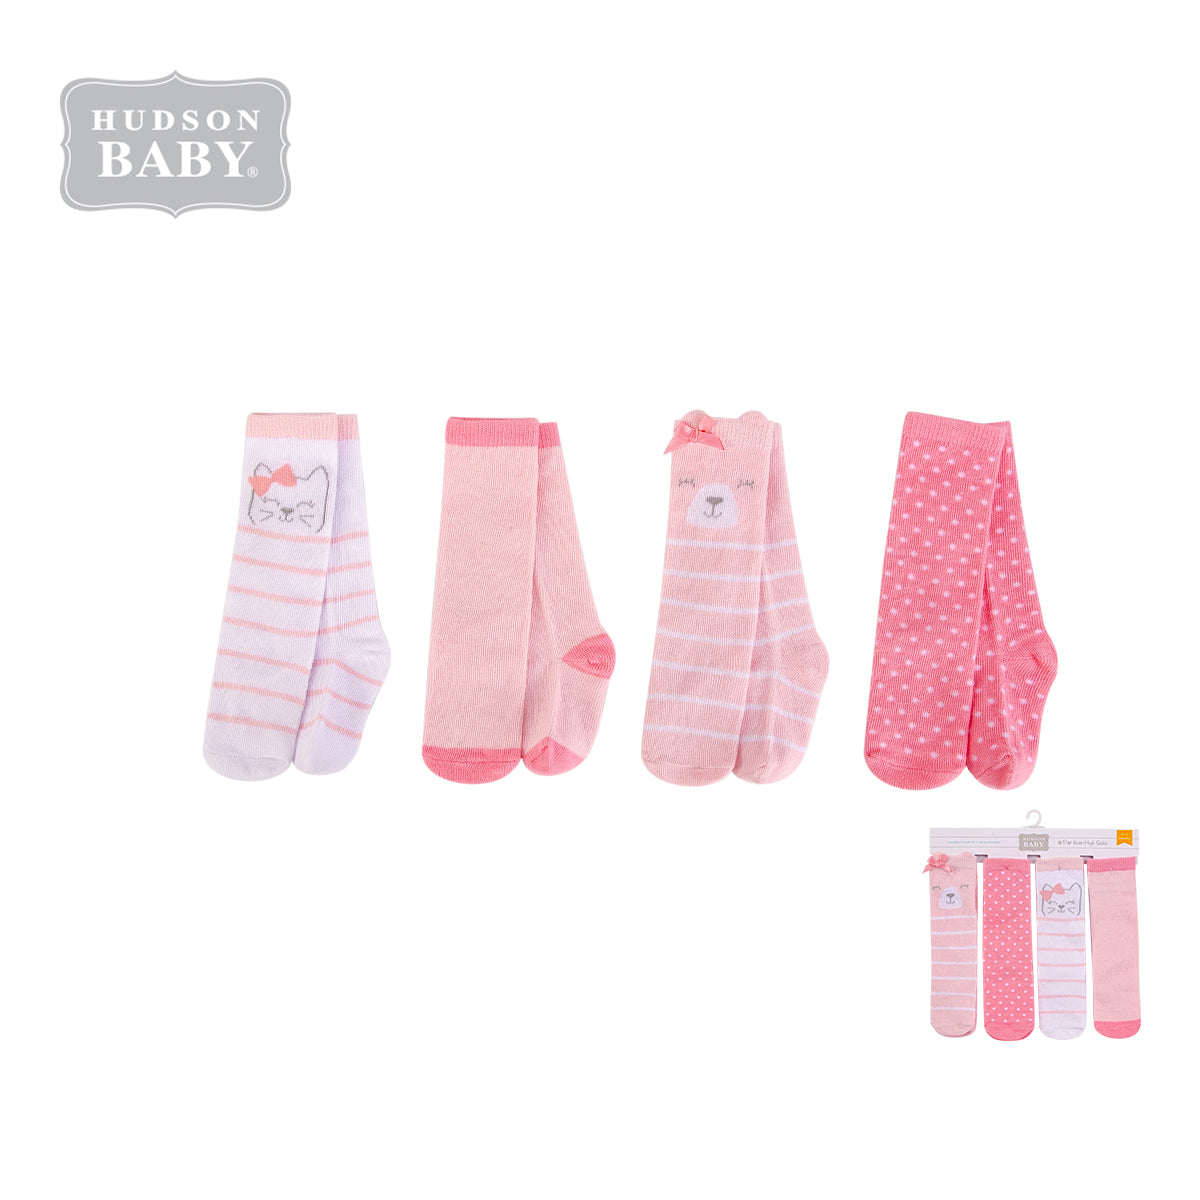 Hudson Baby Knee High Socks 4 Pairs Pack 00387 - 1221 - Little Kooma